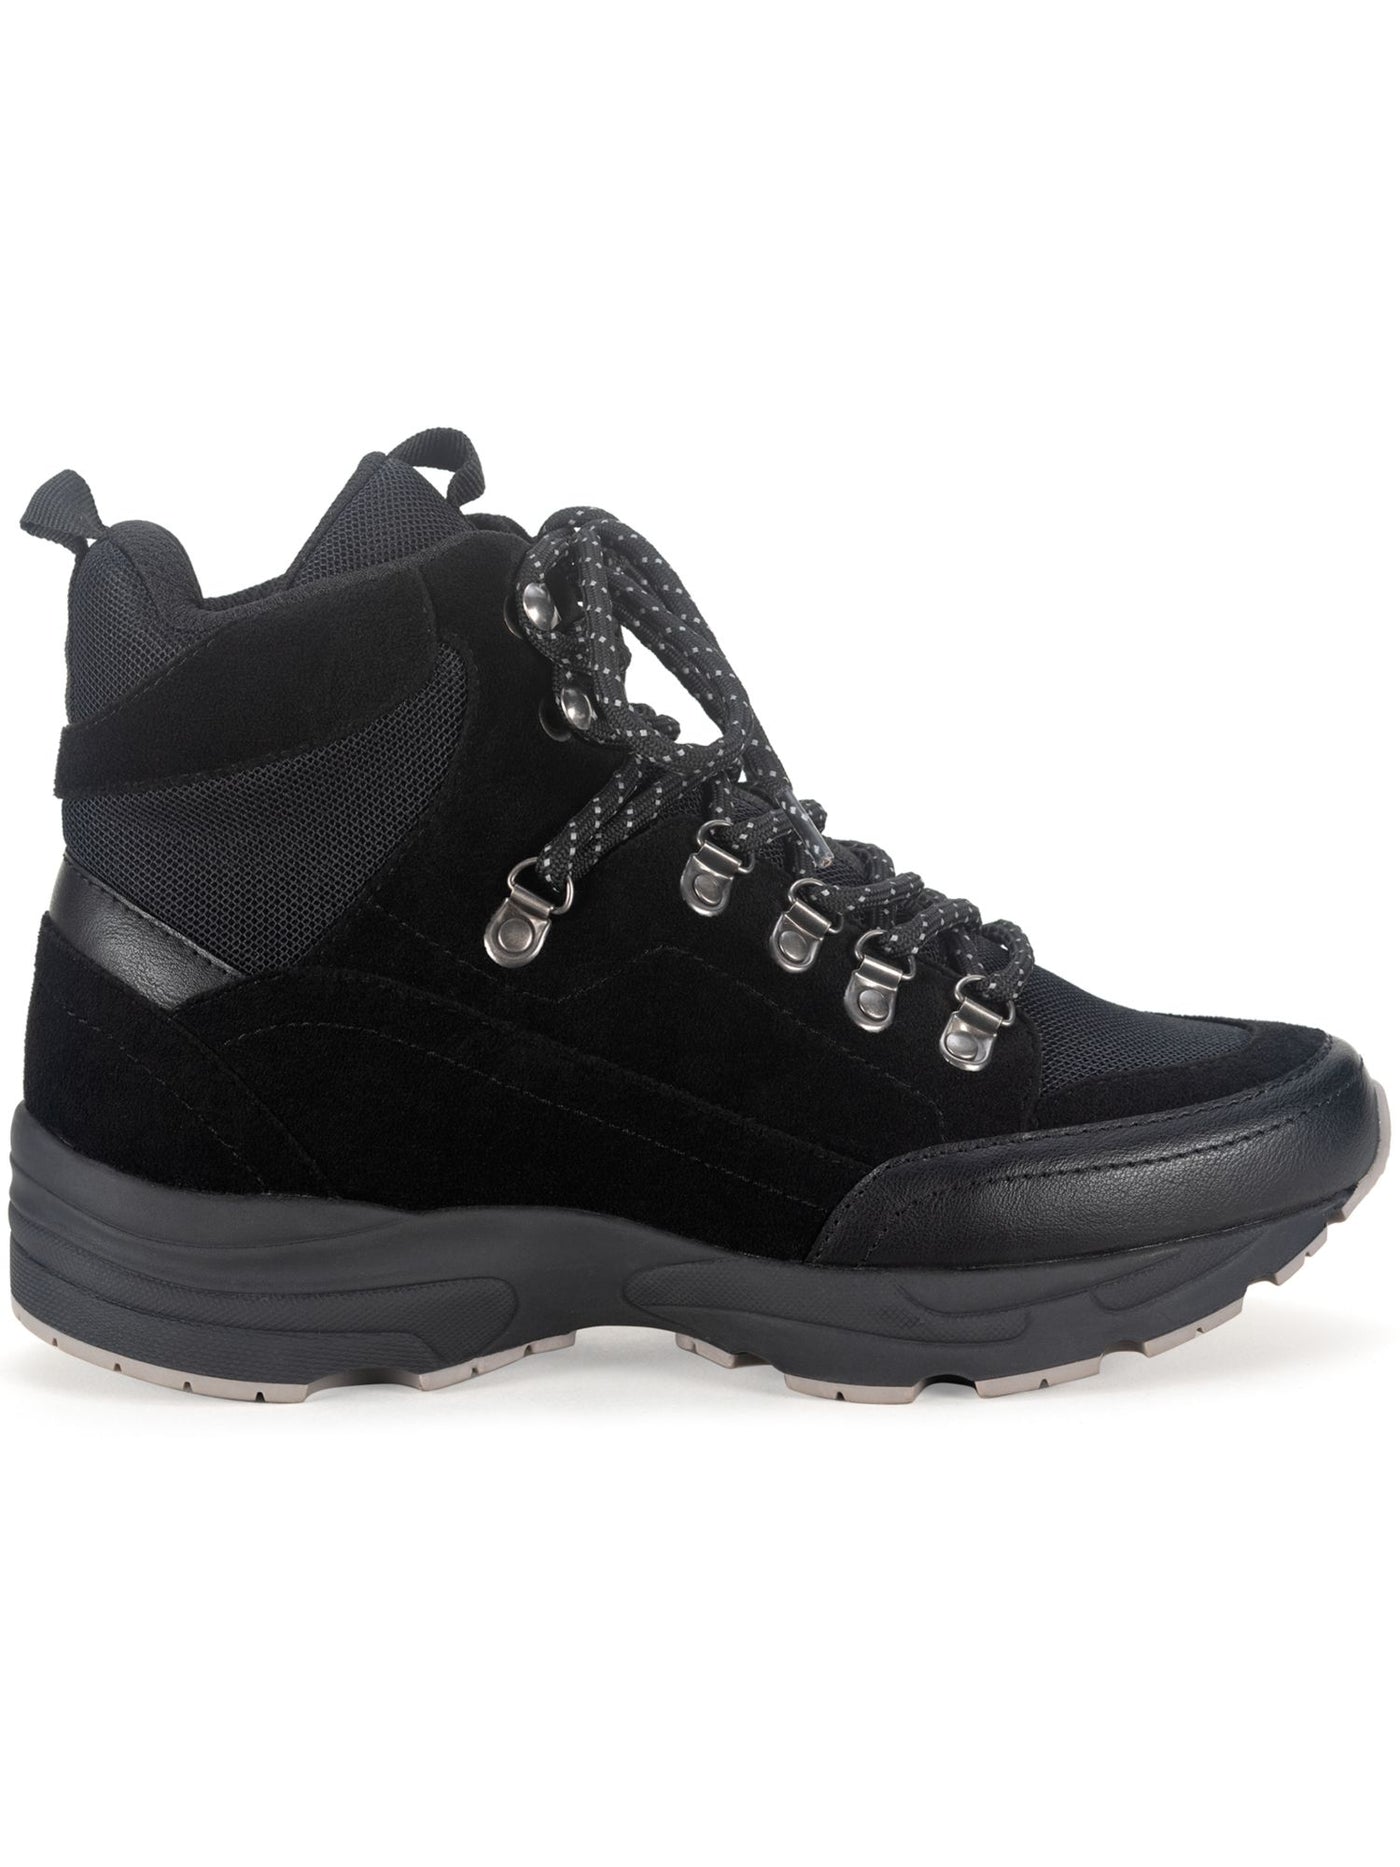 AMERICAN RAG Shoes Black Juniors 9.5 M